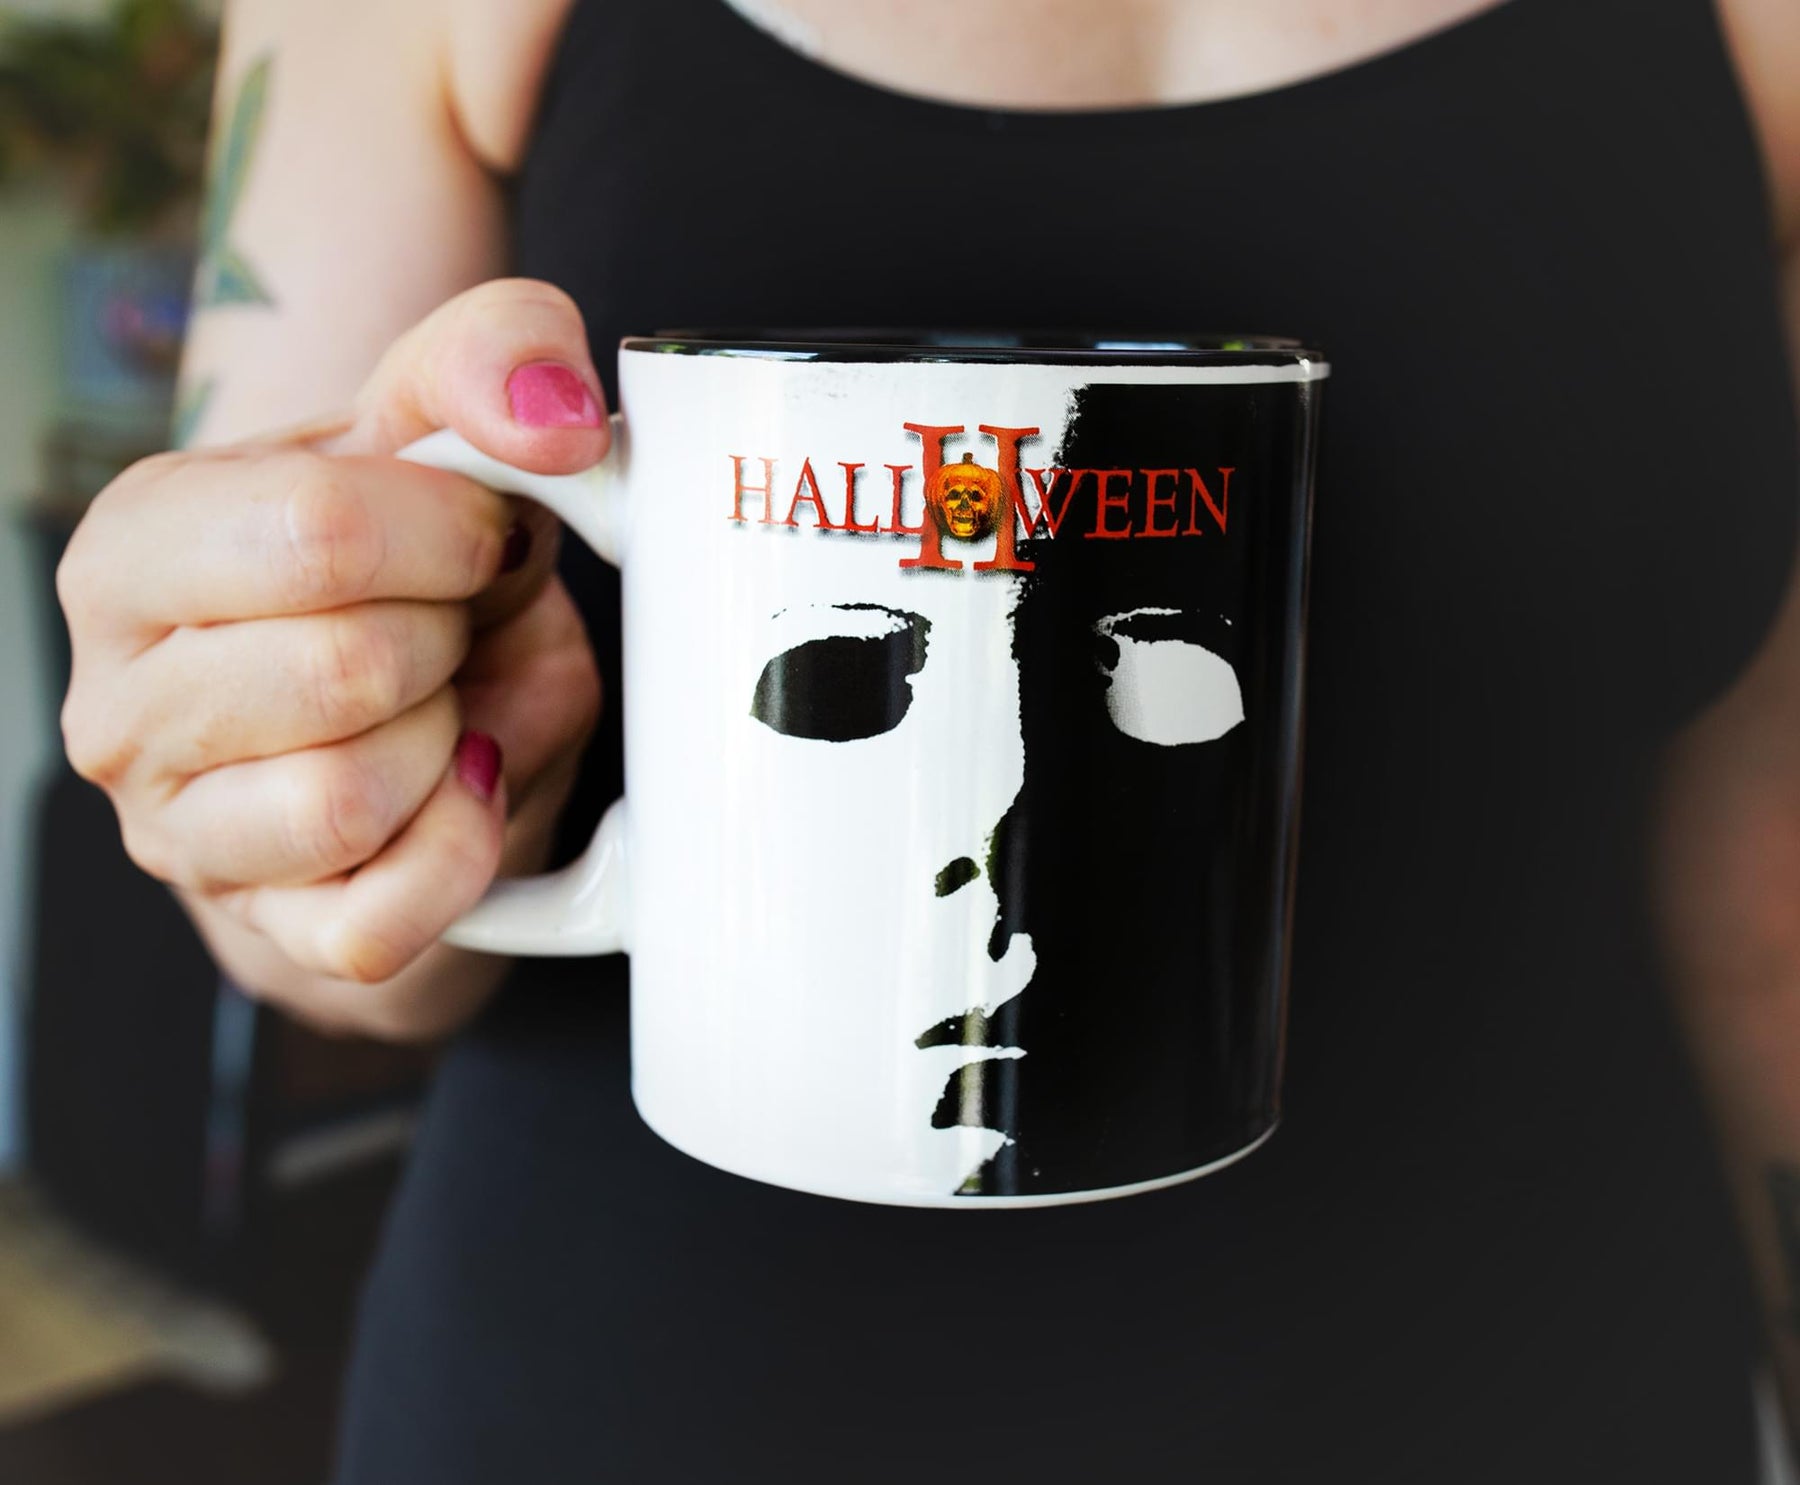 Halloween II Michael Myers Face Ceramic Mug | Holds 20 Ounces